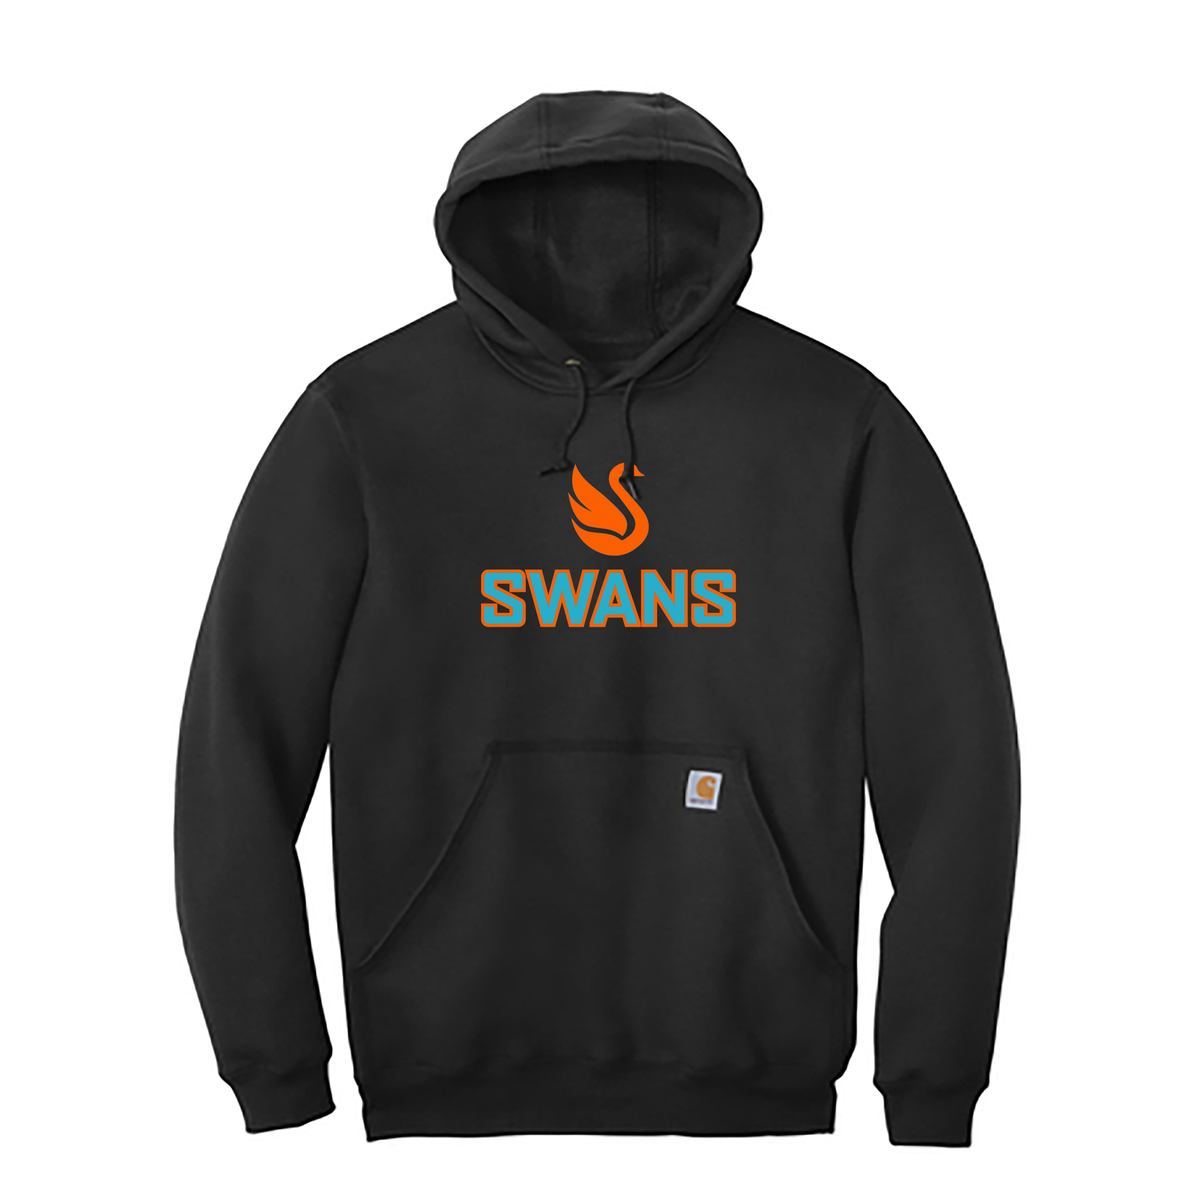 Swans Lacrosse Carhartt Midweight Hooded Sweatshirt